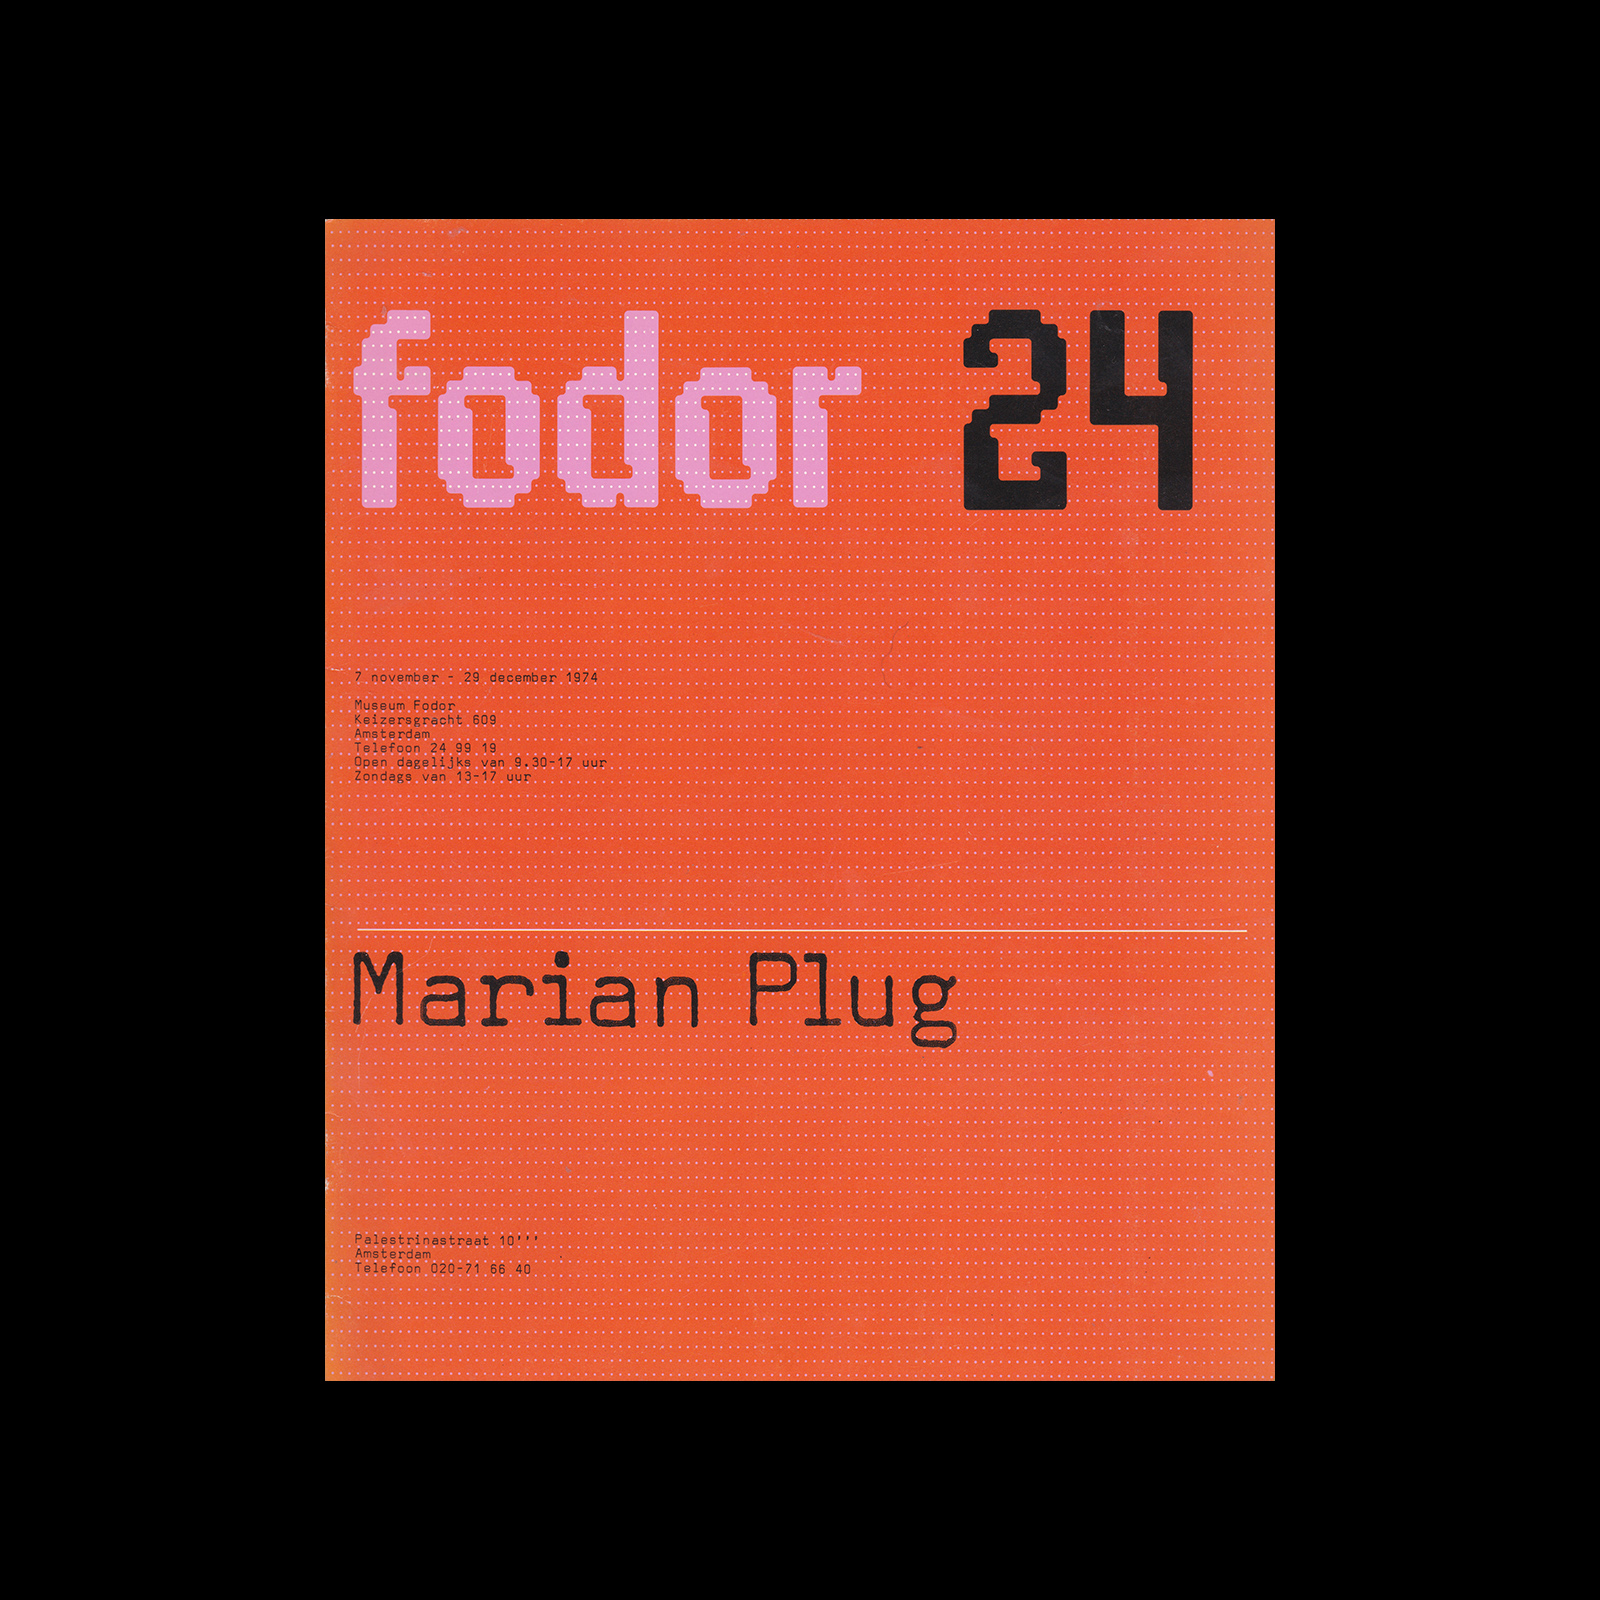 Fodor 24, 1974 - Marian Plug. Designed by Wim Crouwel and Daphne Duijvelshoff (Total Design)